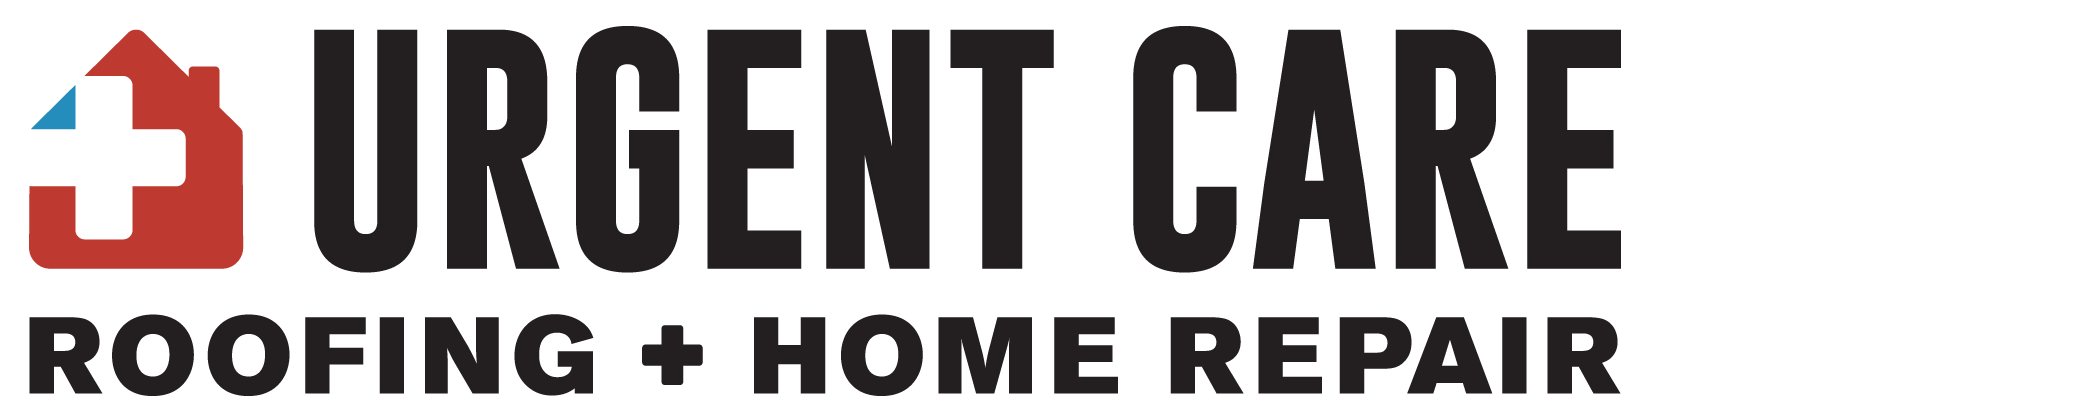 urgent care header logo